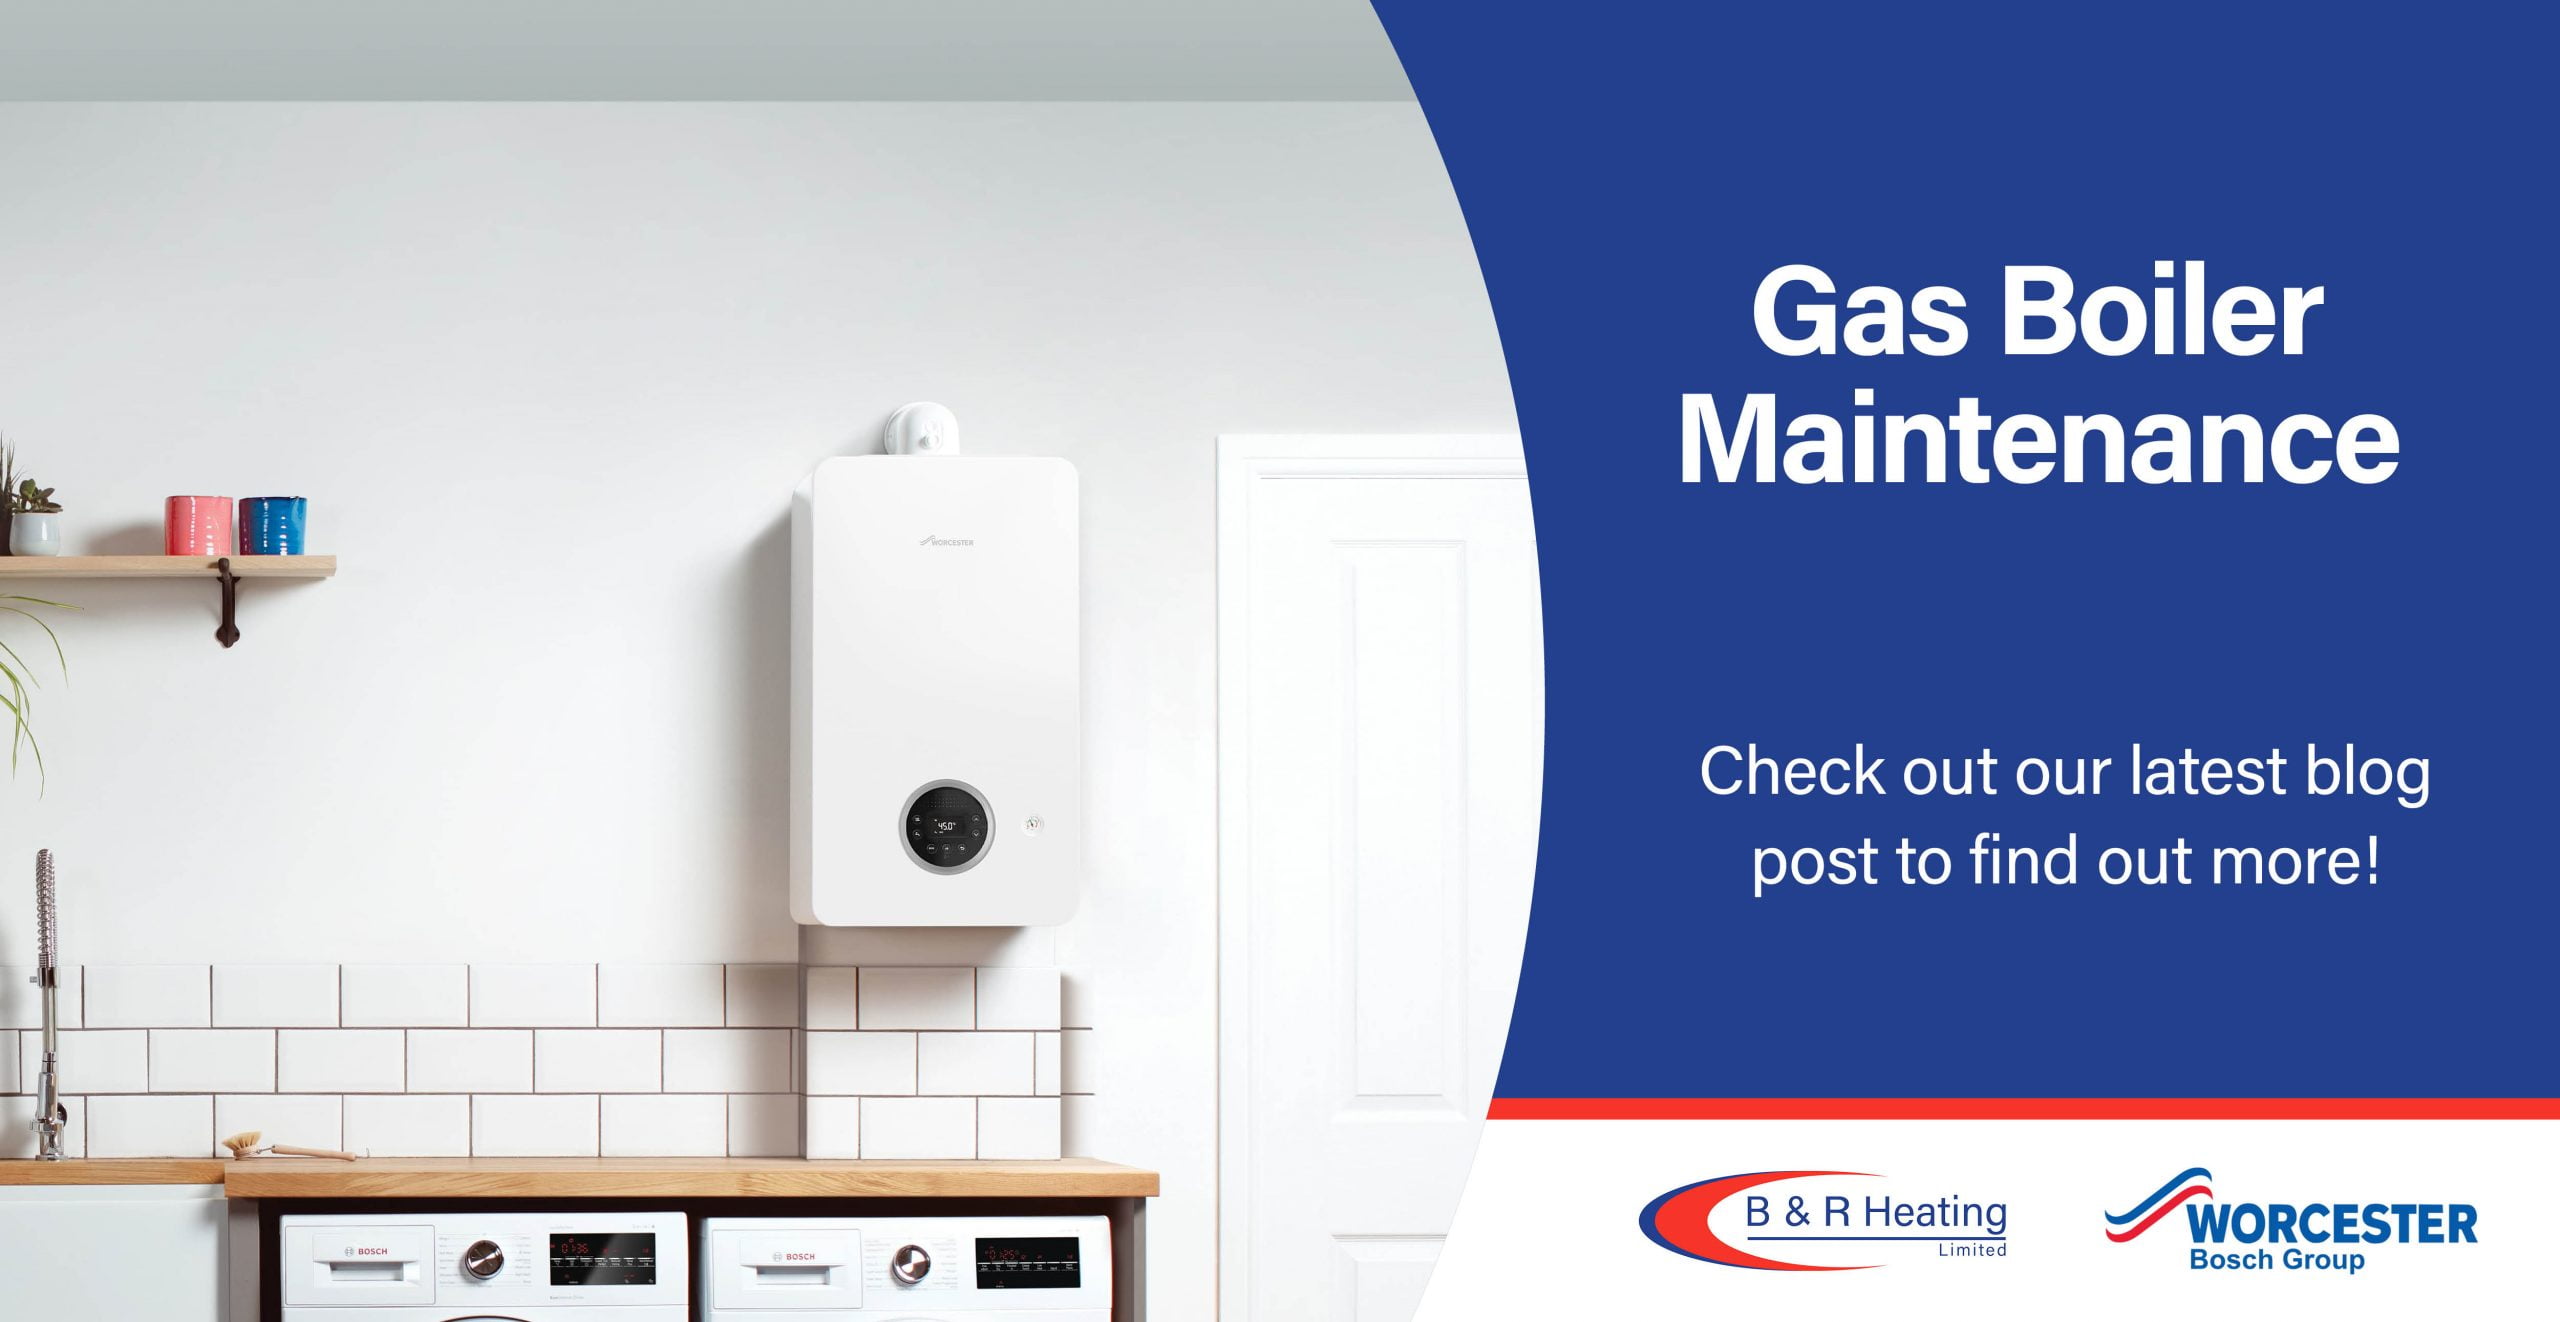 Gas Boiler Maintenance Blog post by B&R Heating